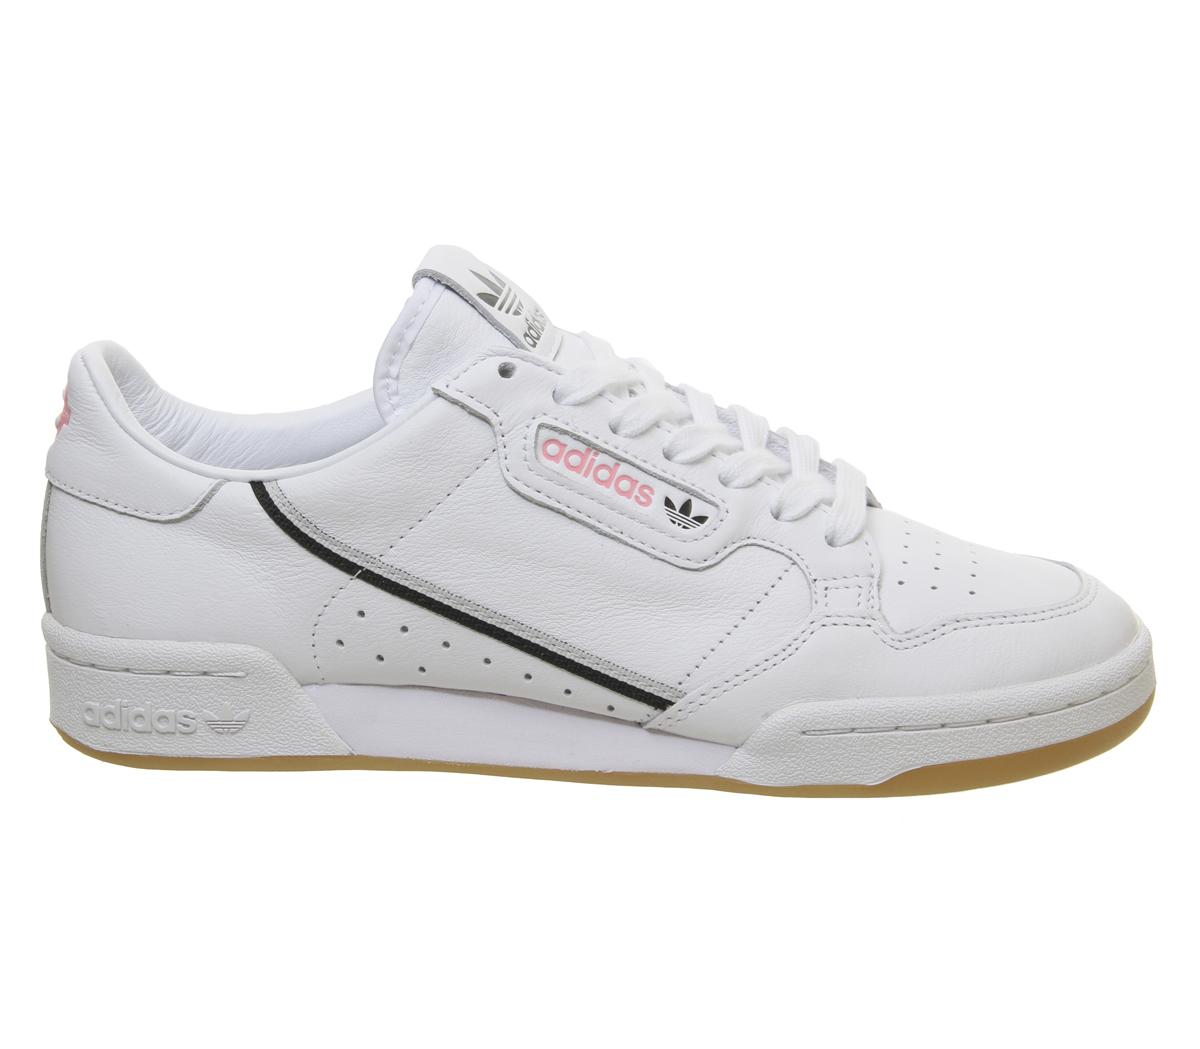 adidas continental 80's white grey core black pink gum tfl